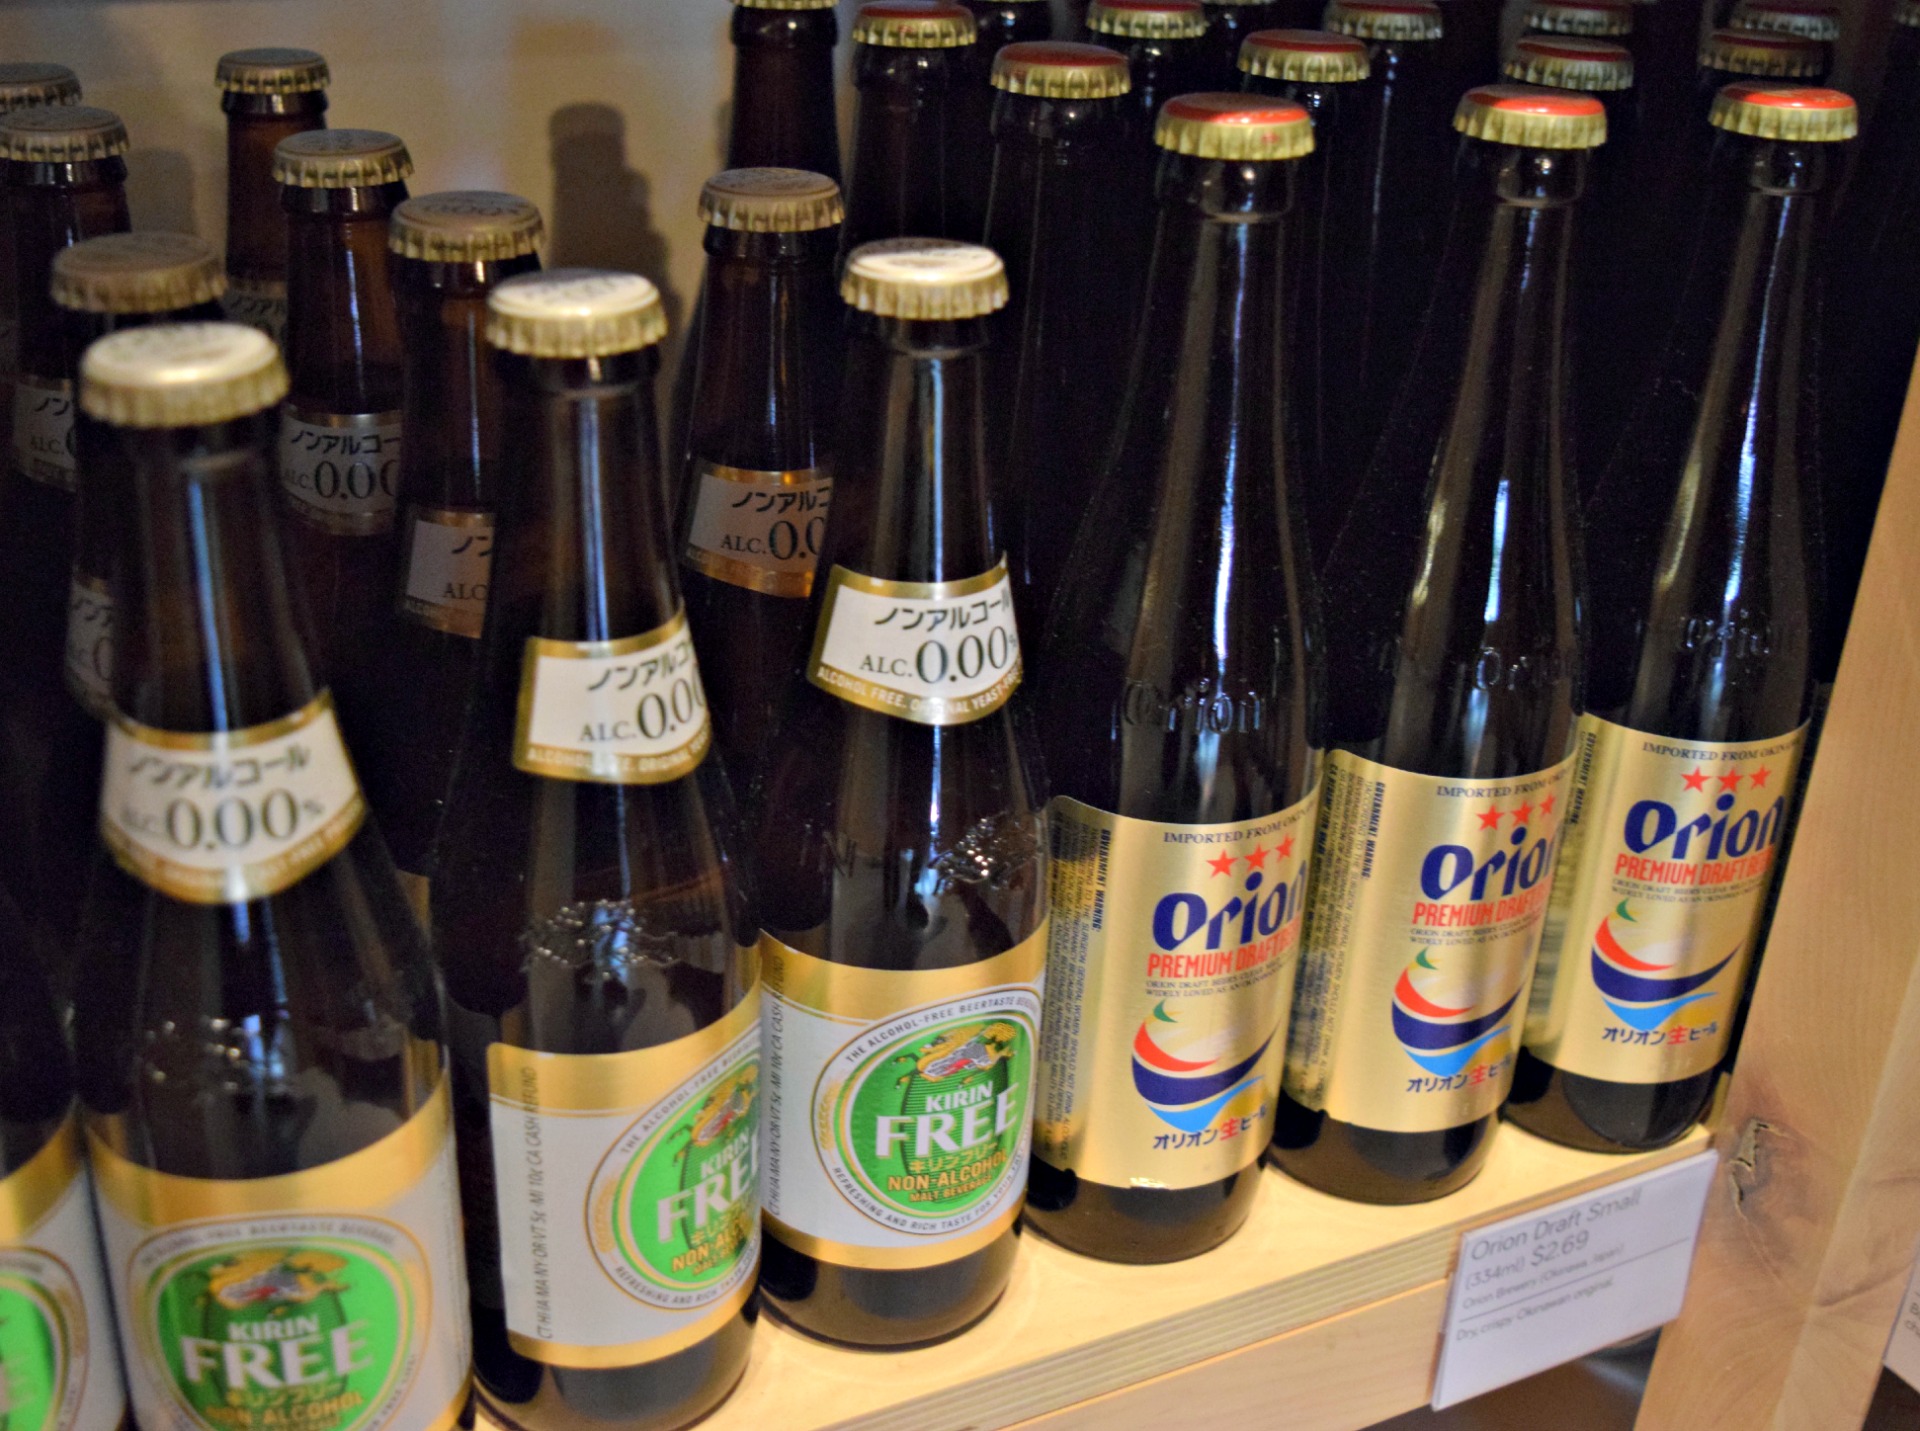 Alcohol-free beers, like this Kirin beer, are popular in Japan.